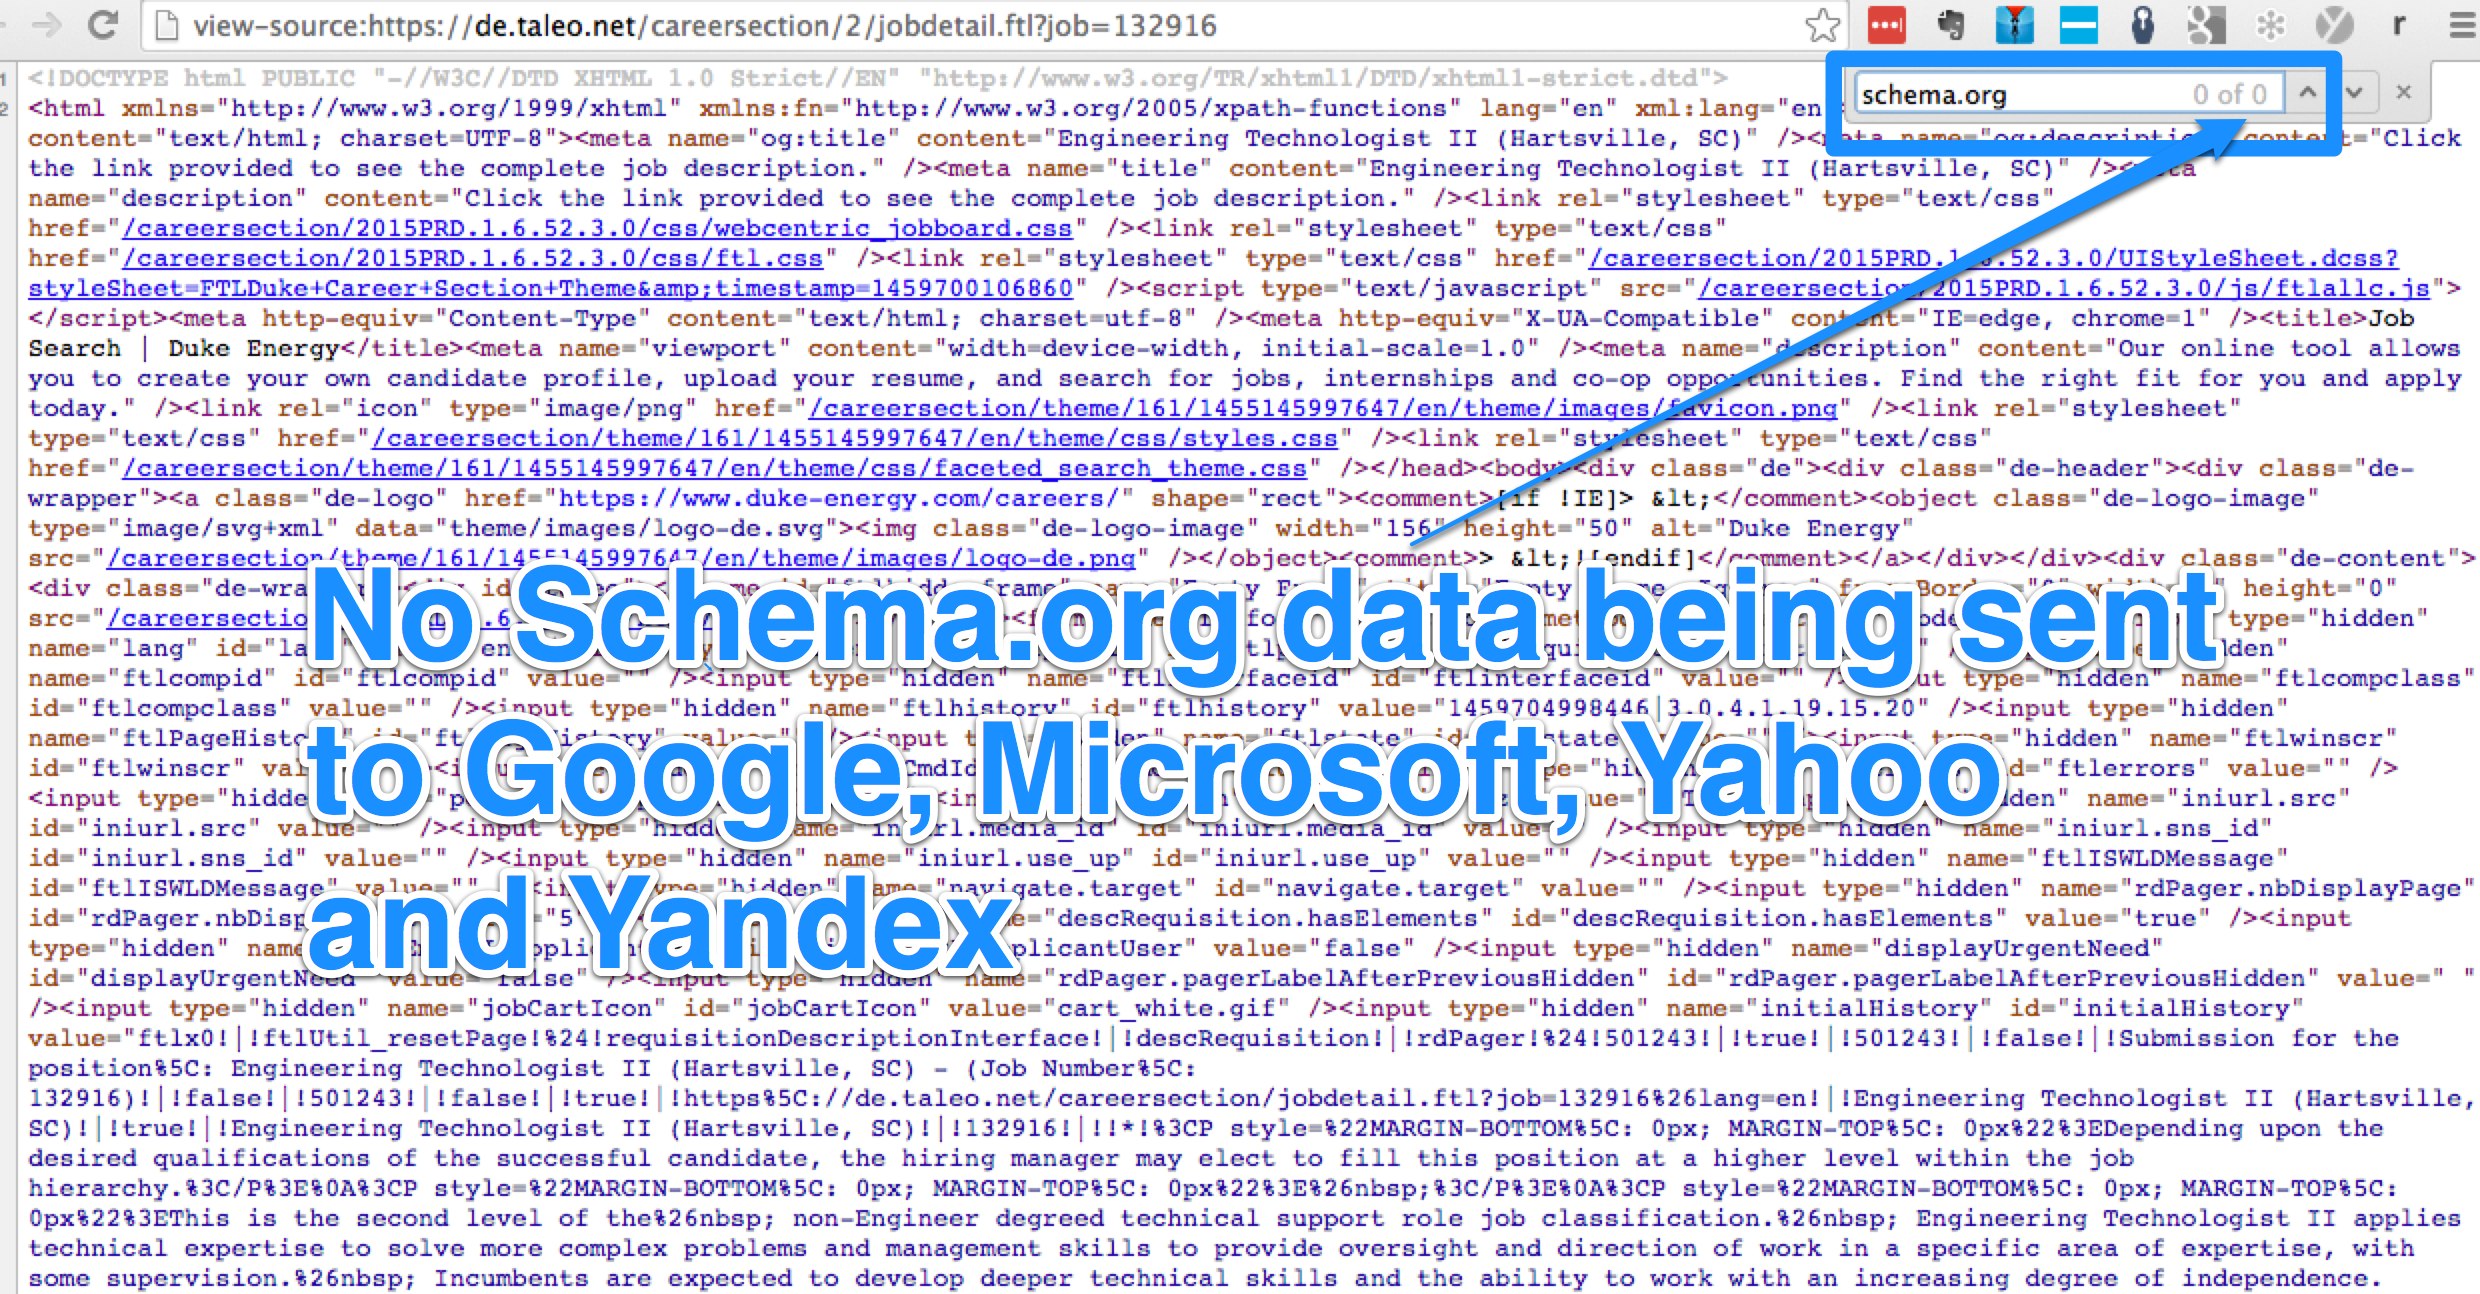 Schema.org for job descriptions example of no microdata SEO